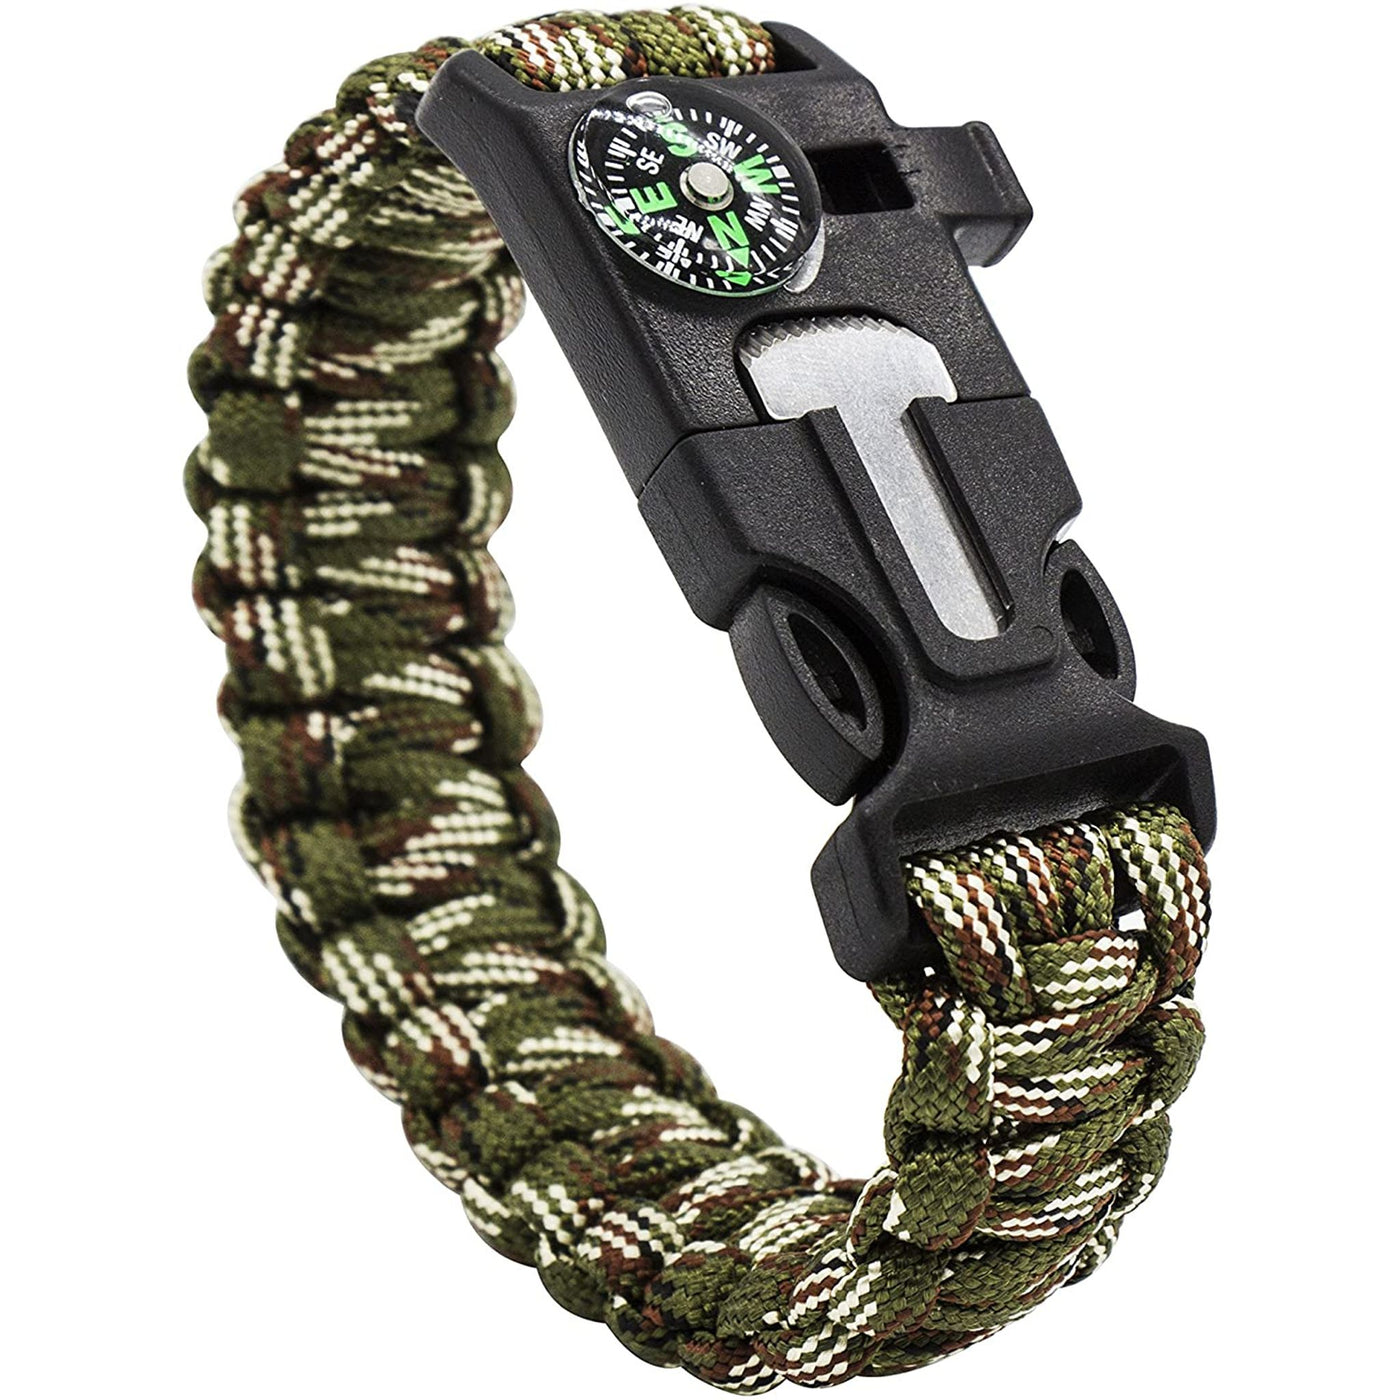 Nema NM Survival Bracelet Flint Fire Starter Army Gear with Compass :  Amazon.in: Sports, Fitness & Outdoors